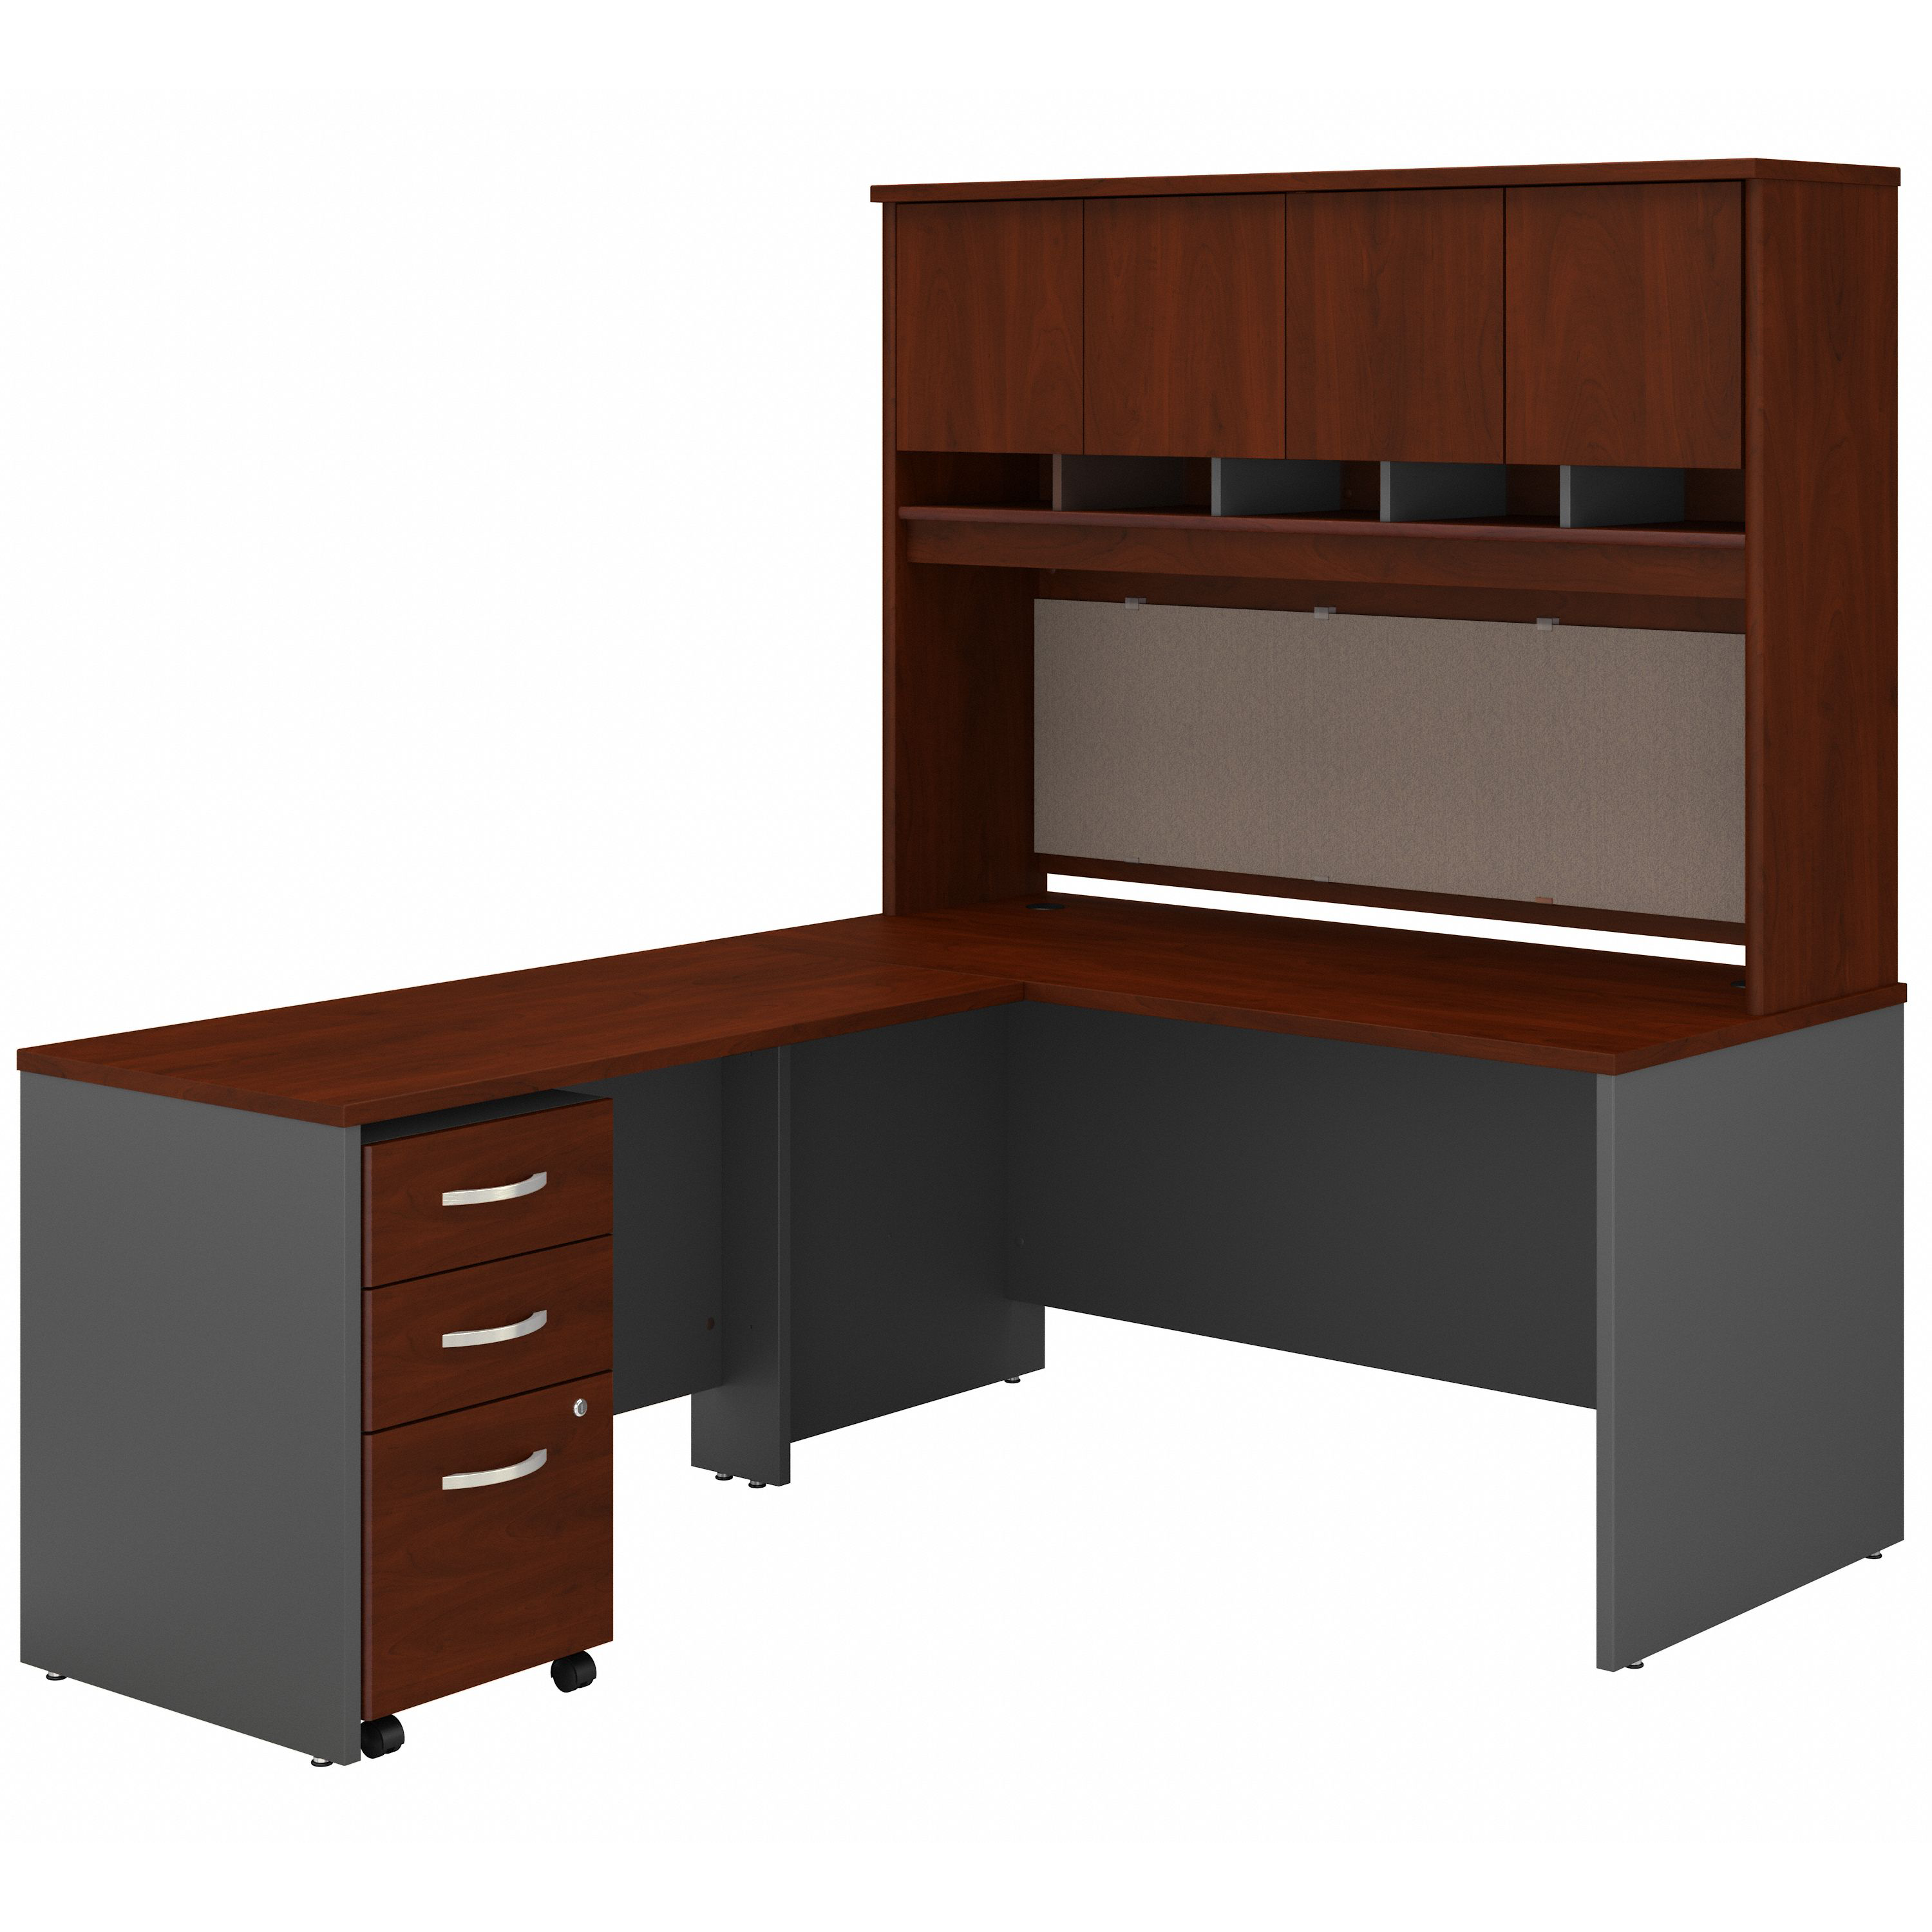 Shop Bush Business Furniture Series C 60W L Shaped Desk with Hutch and Mobile File Cabinet 02 SRC147HCSU #color_hansen cherry/graphite gray